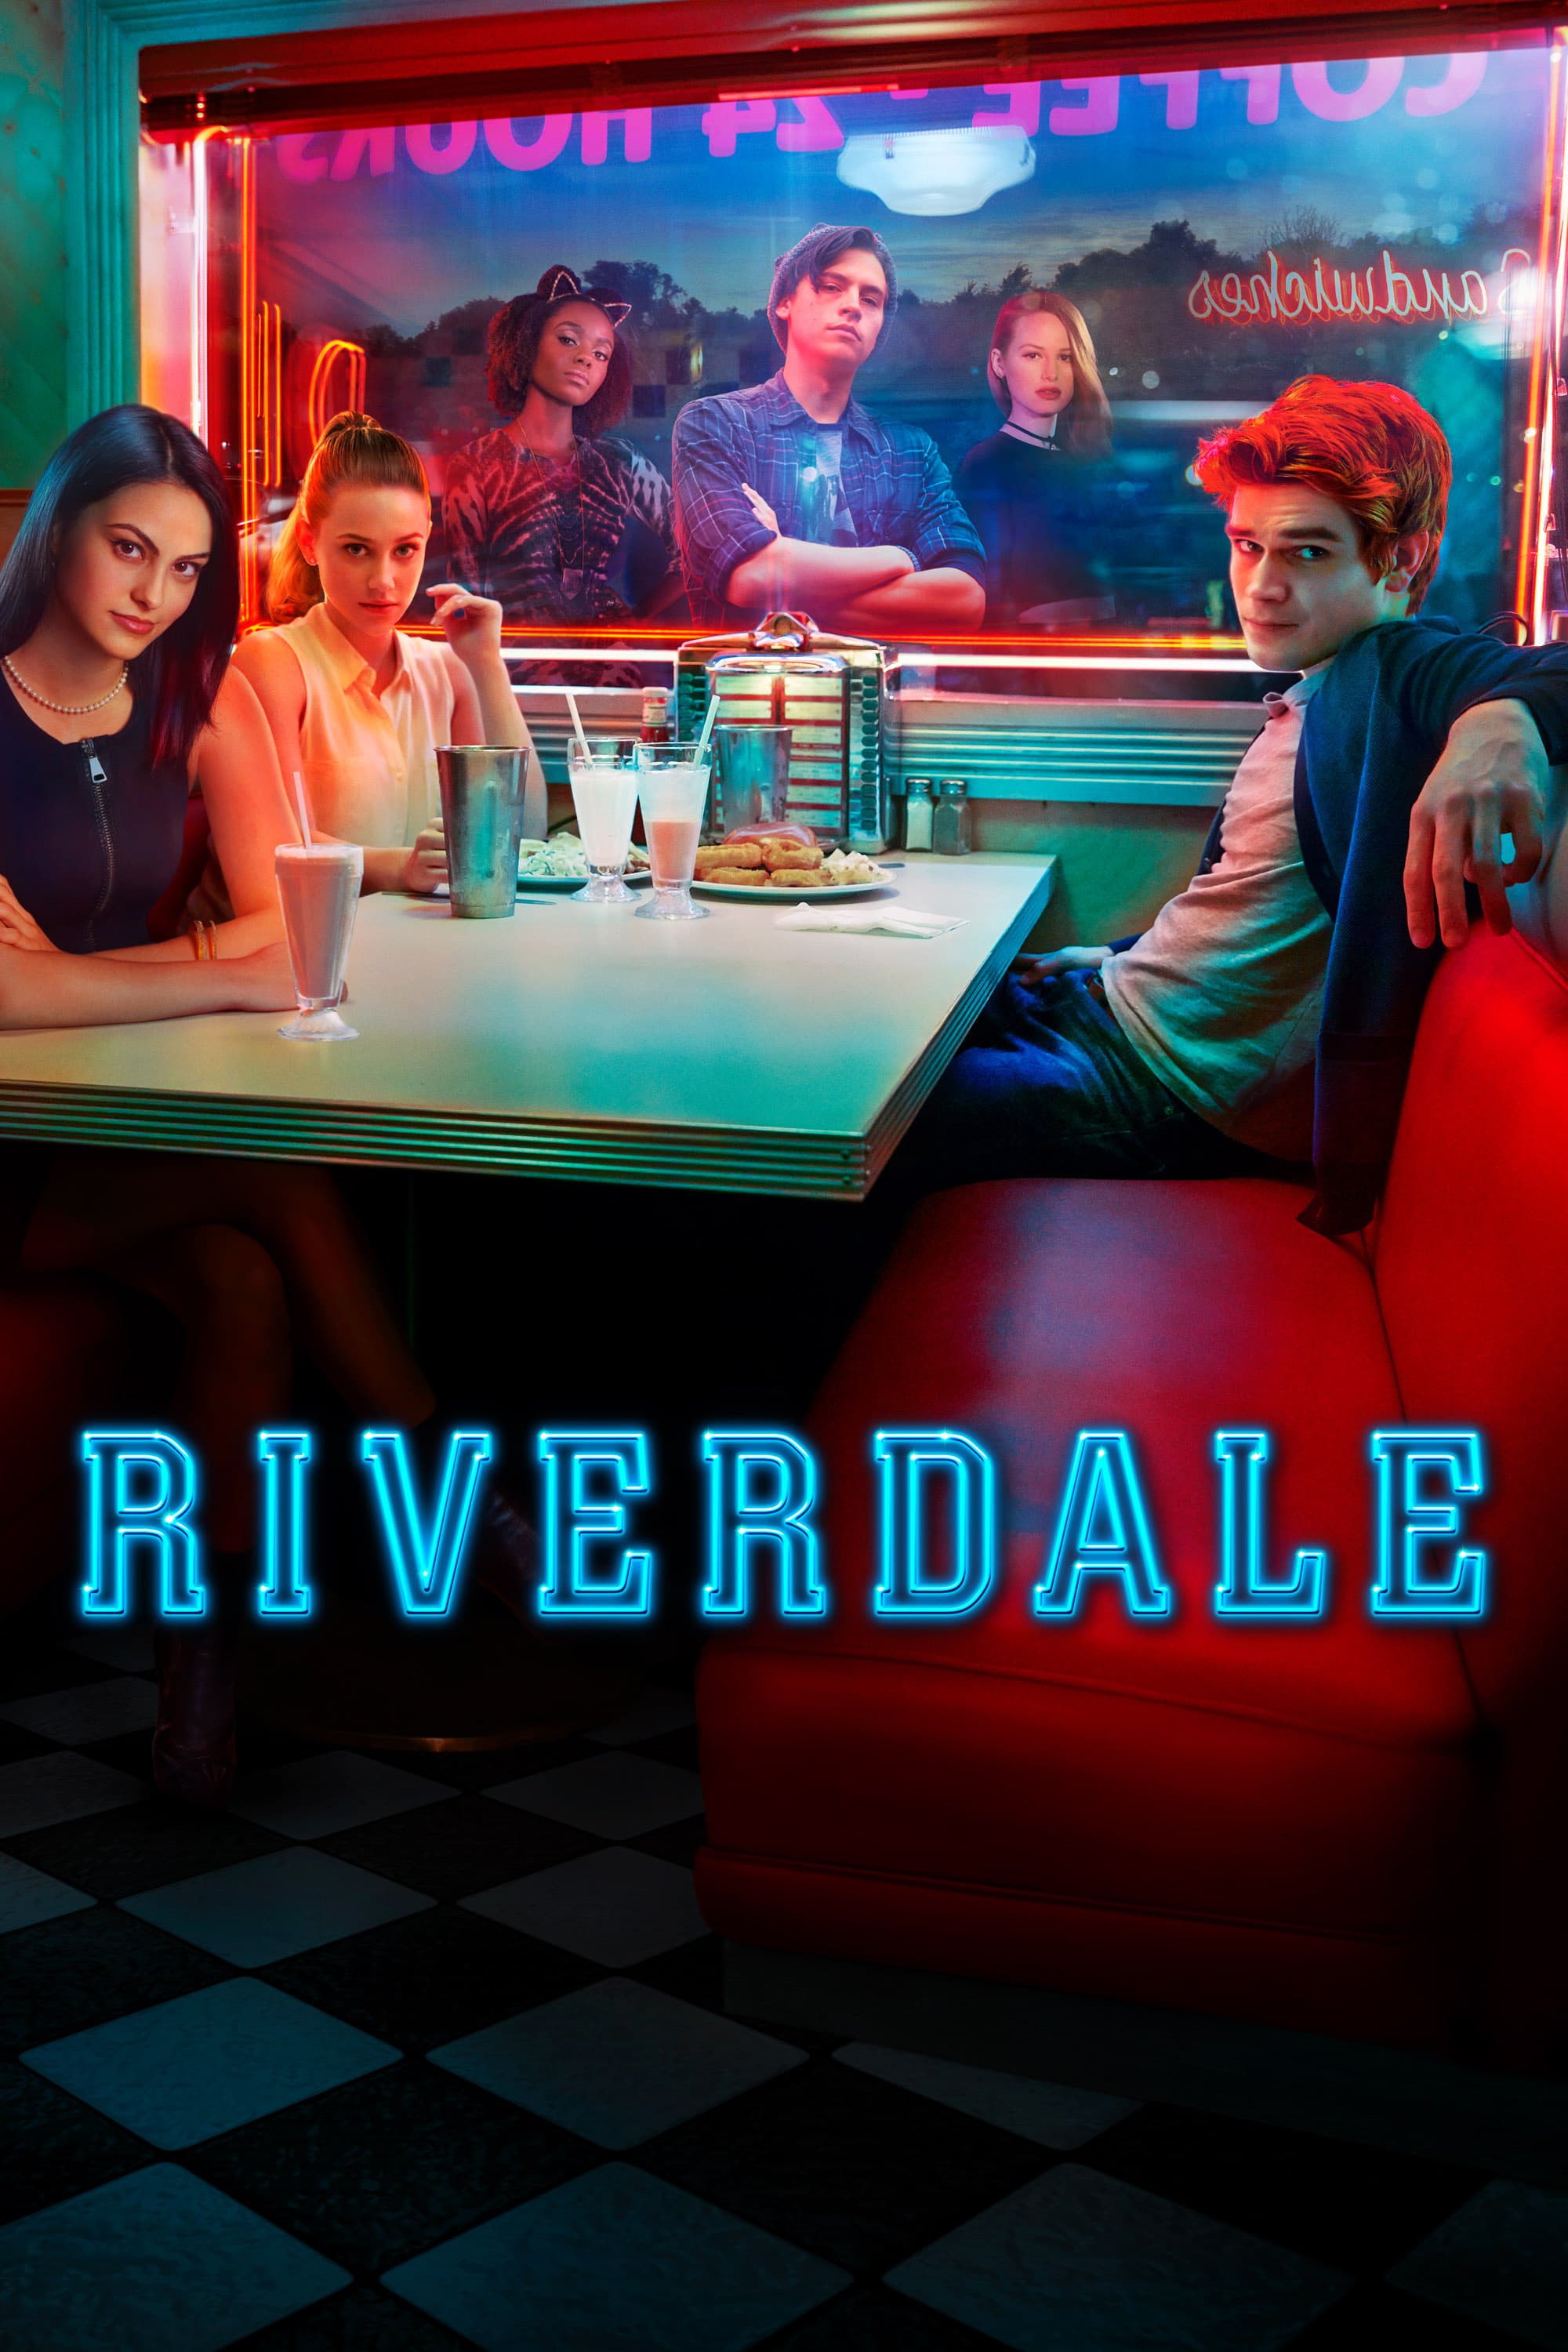 Riverdale rating